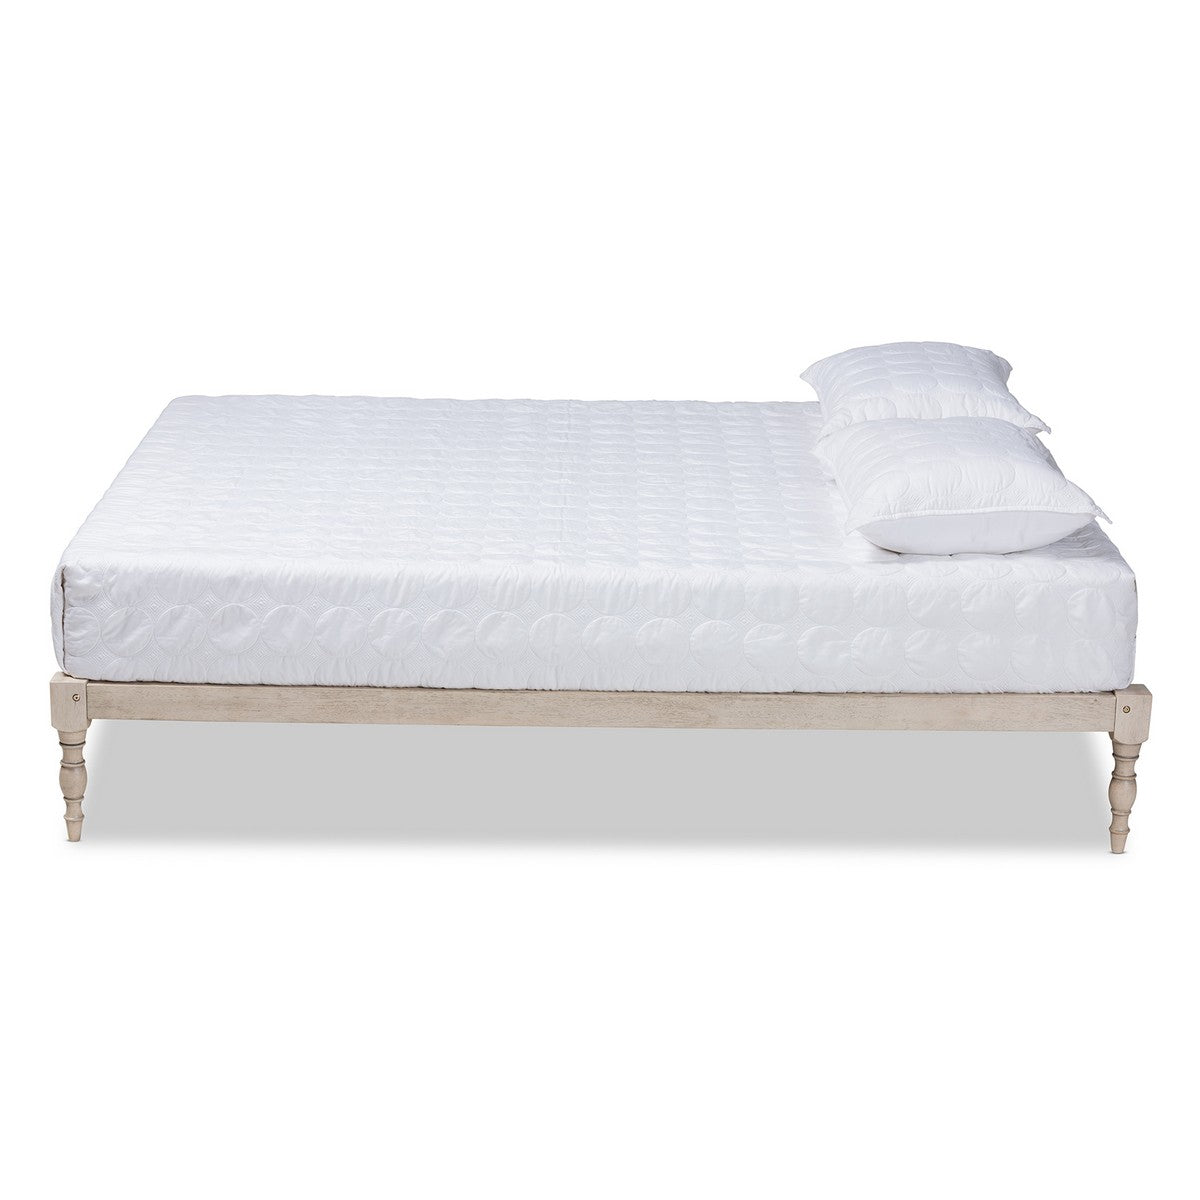 Baxton Studio Iseline Modern and Contemporary Antique White Finished Wood King Size Platform Bed Frame